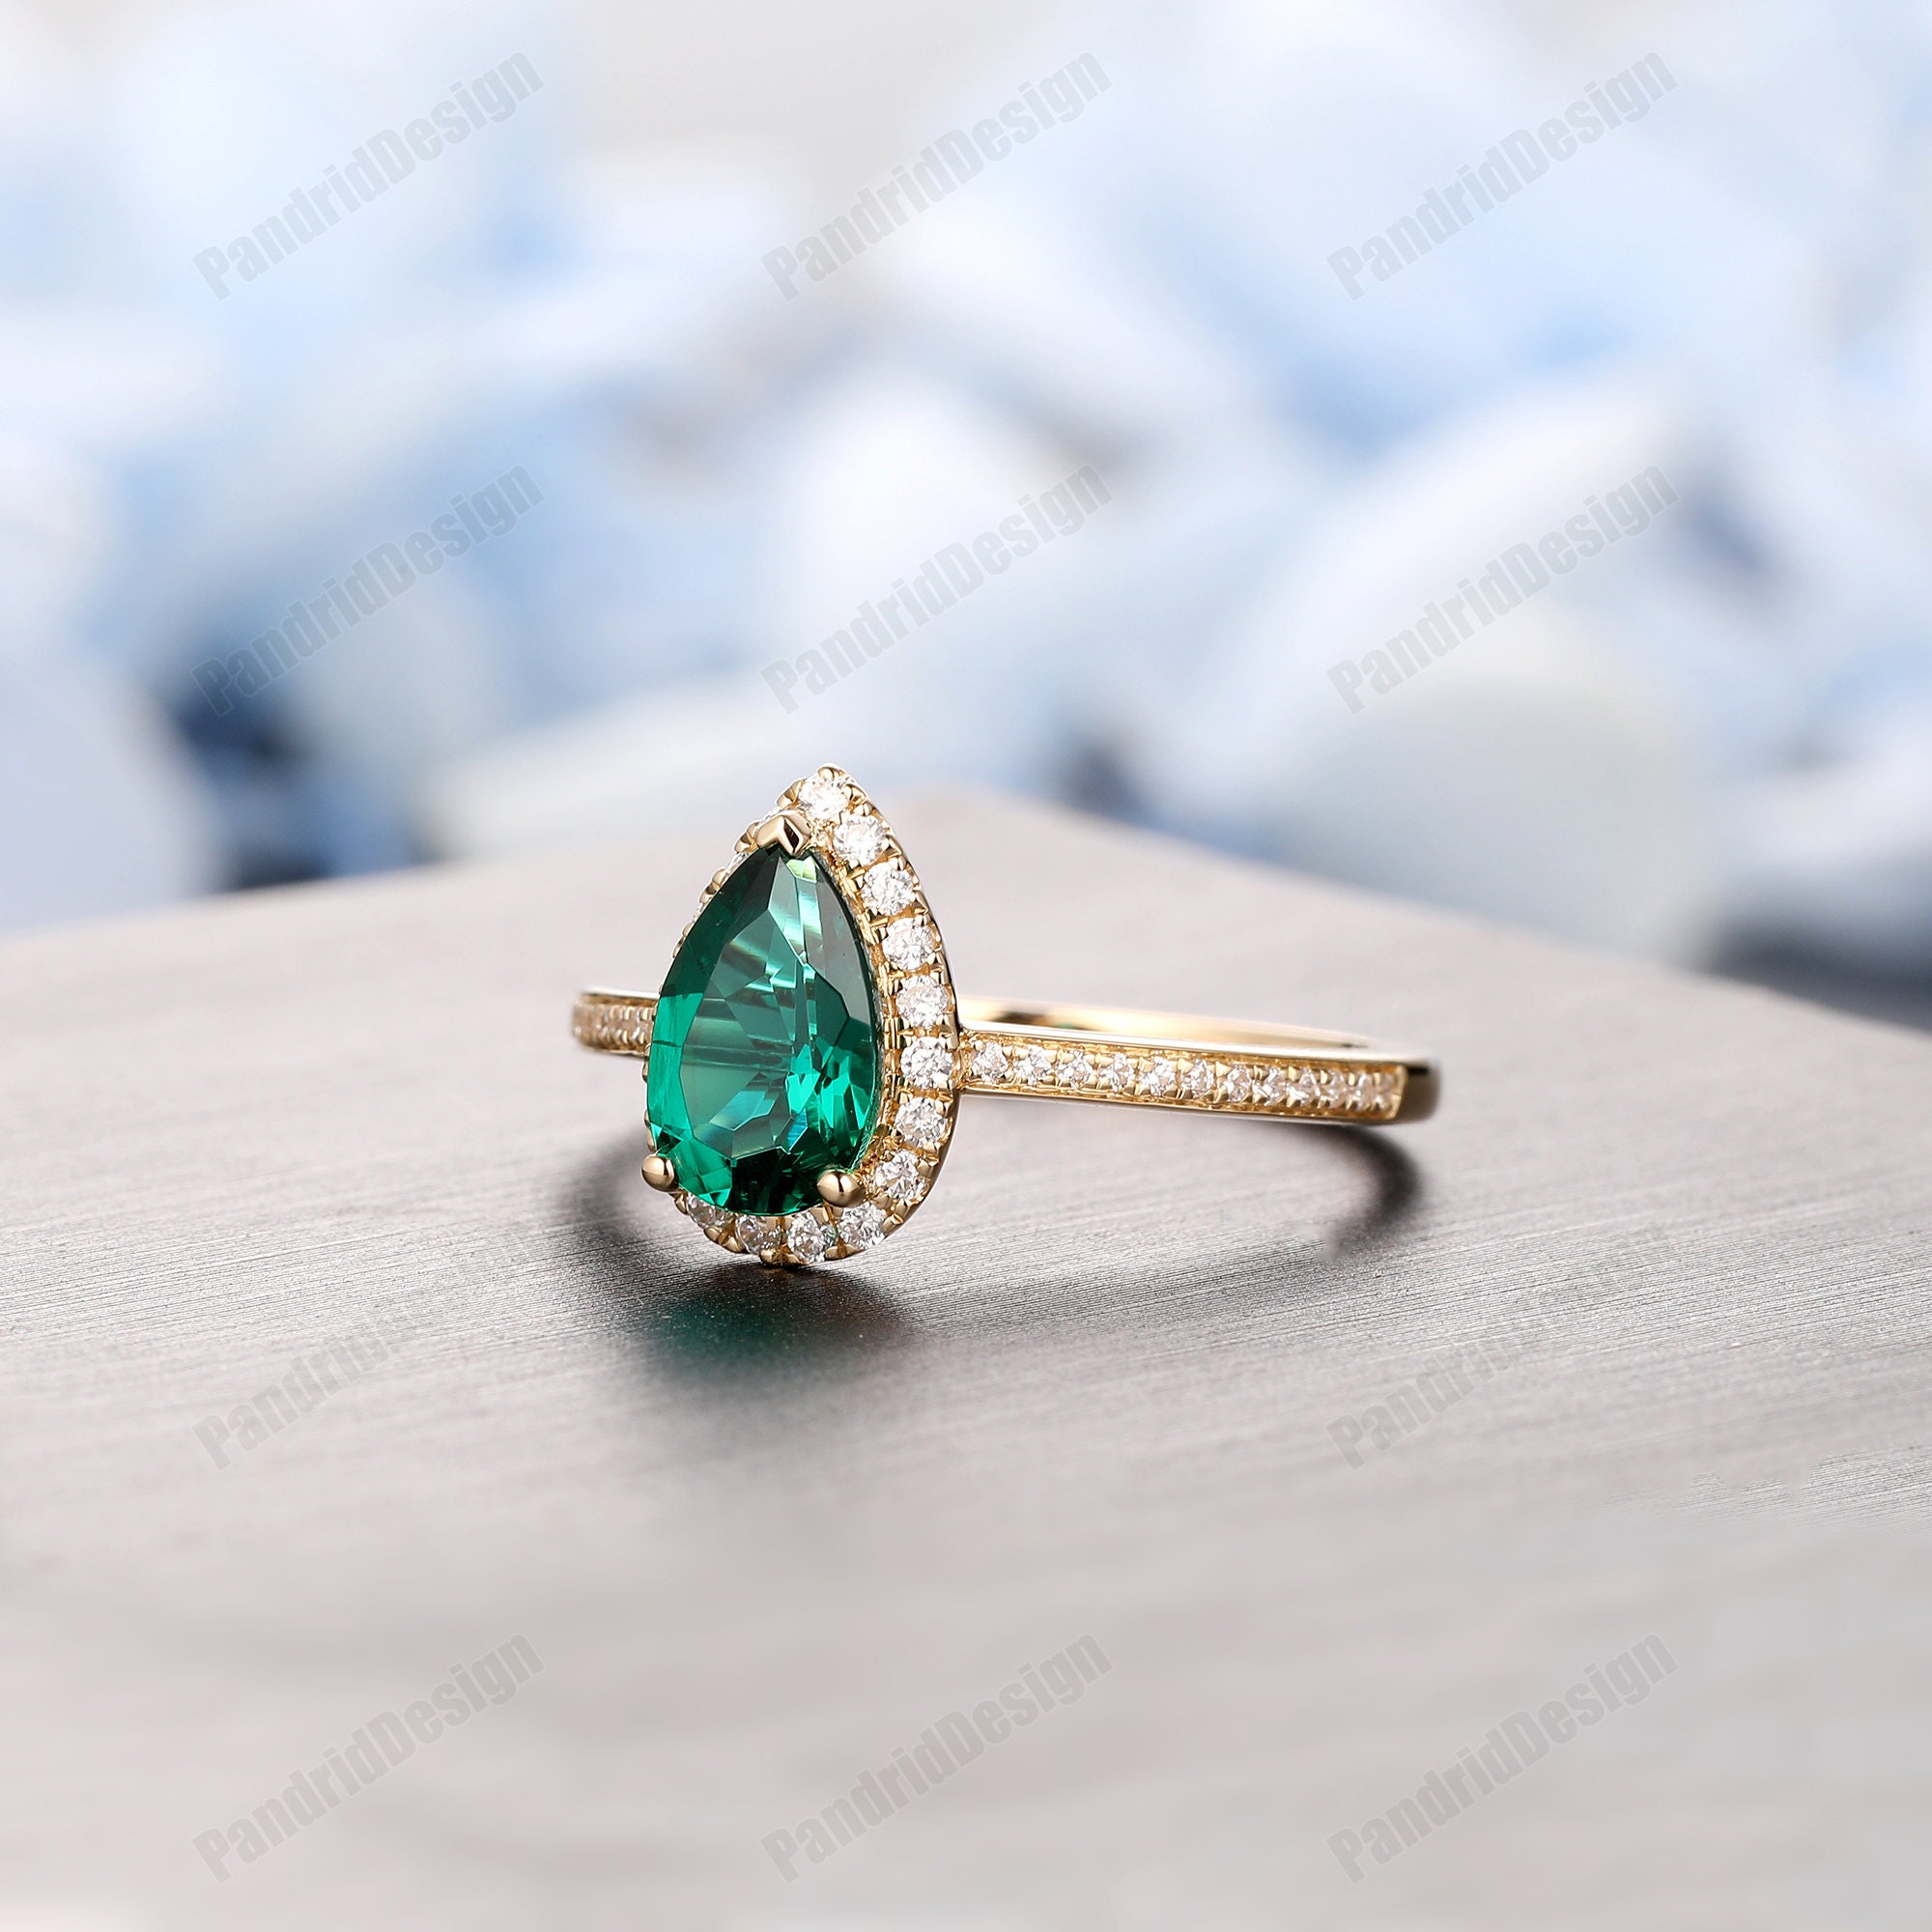 Art Deco Engagement Ring Halo Simulated Diamond Ring 5x8mm | Etsy